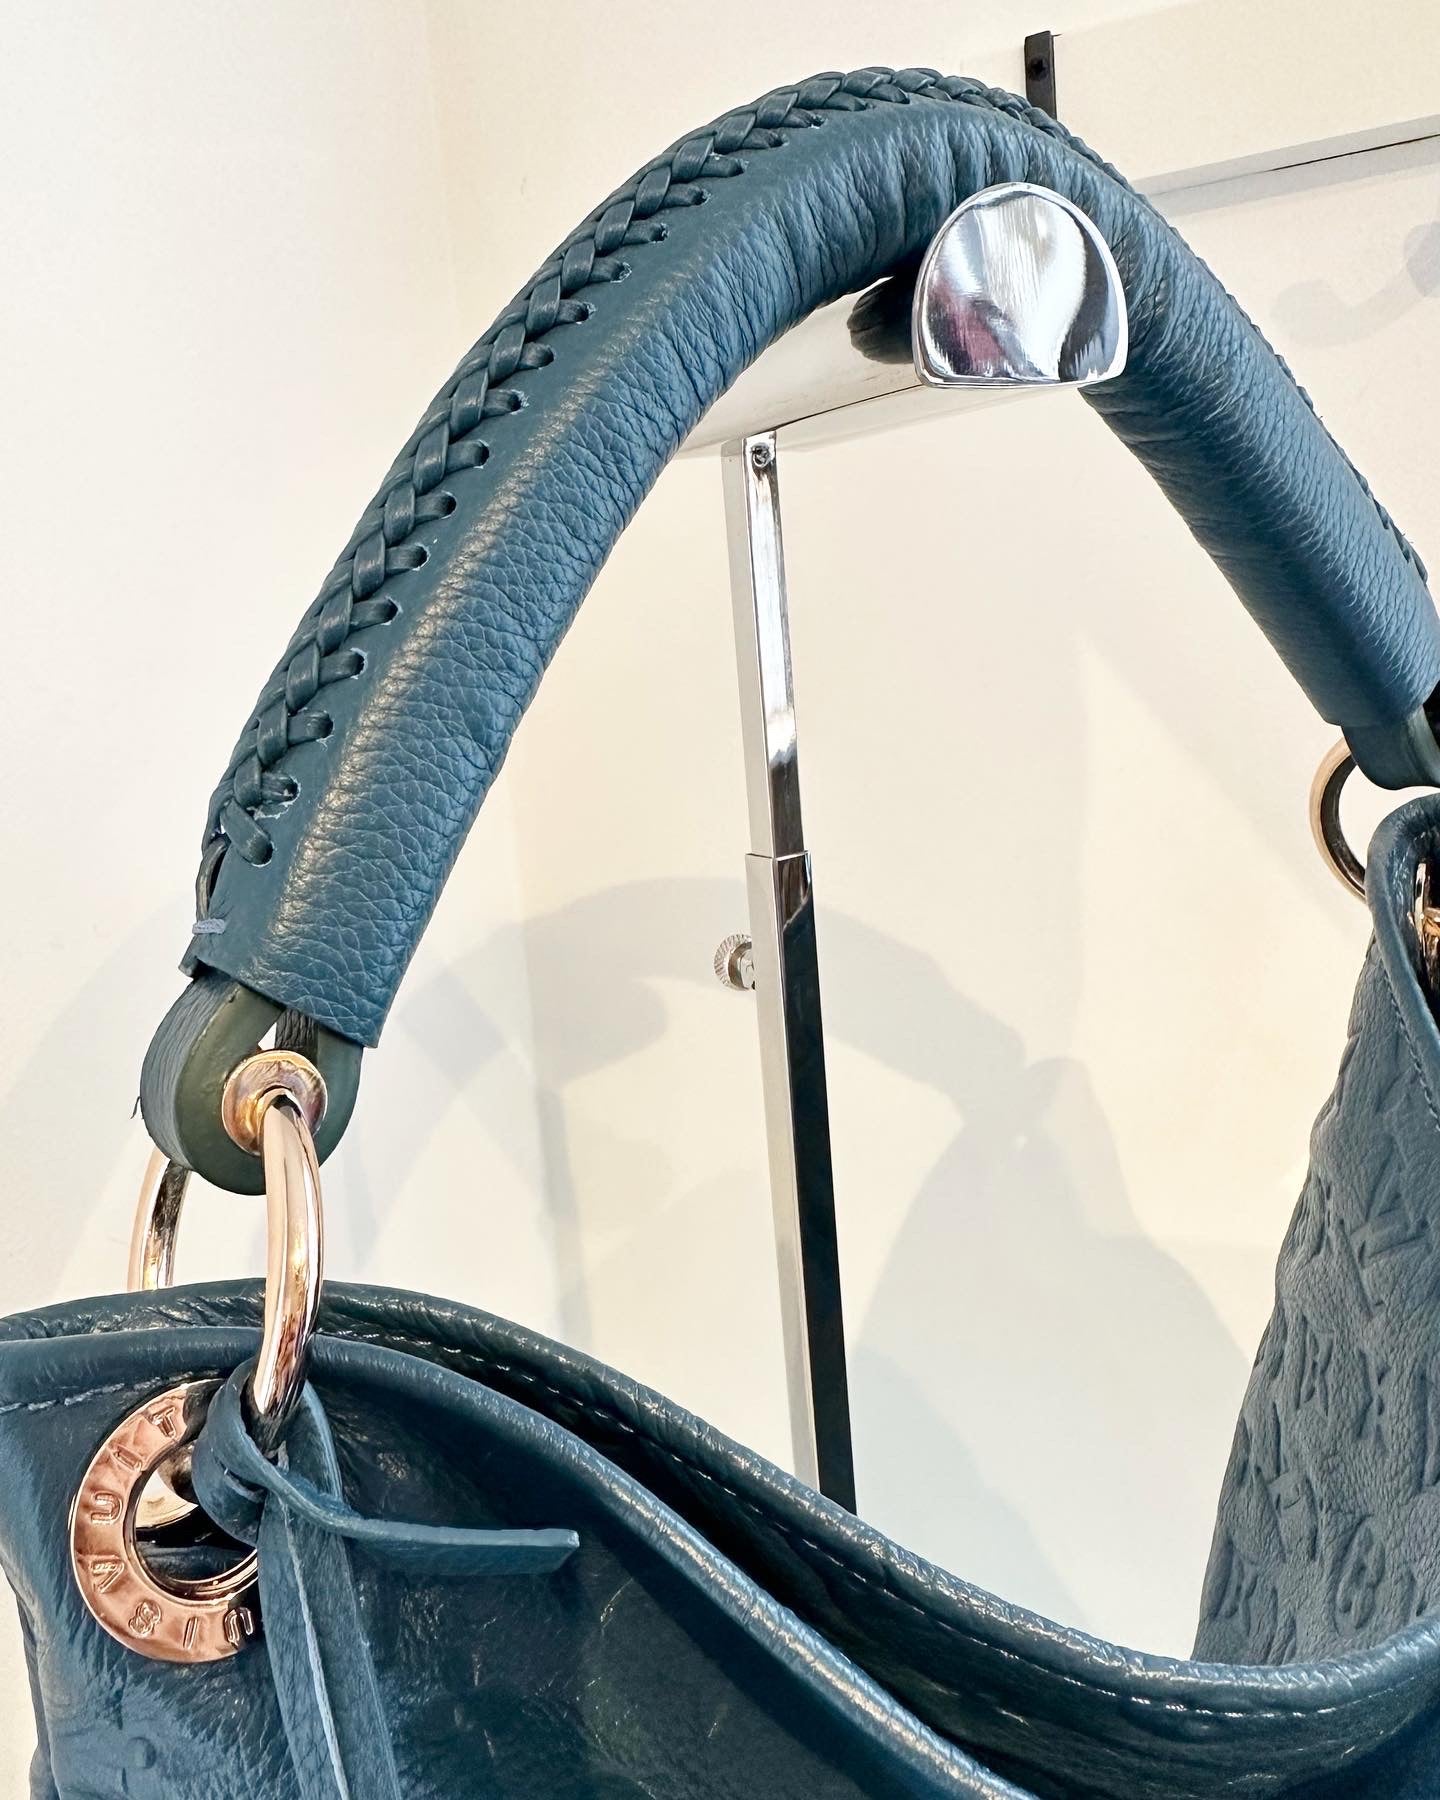 Louis Vuitton Orage Monogram Empreinte Leather Artsy MM Bag at